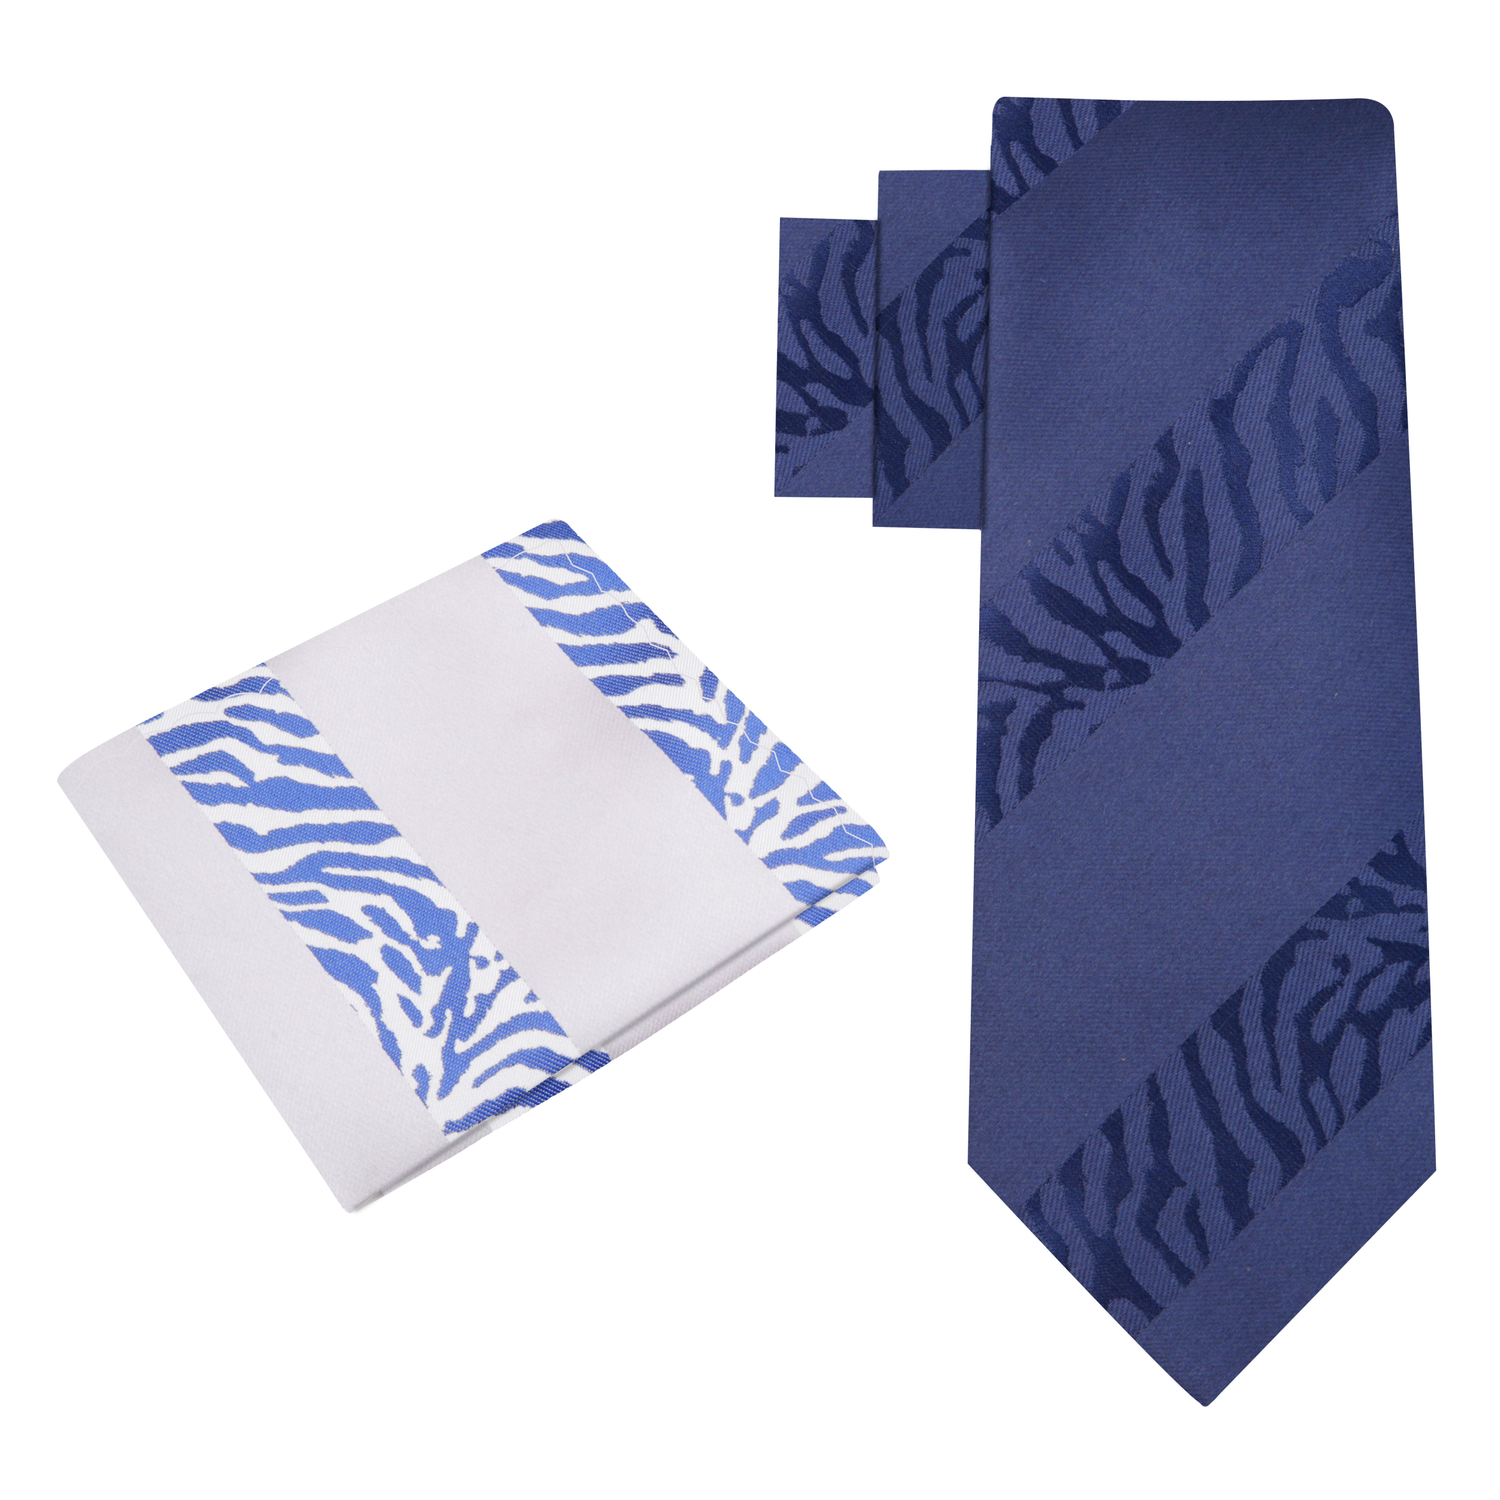 View 2: Dark Blue Tiger Tie and White Pocket Square